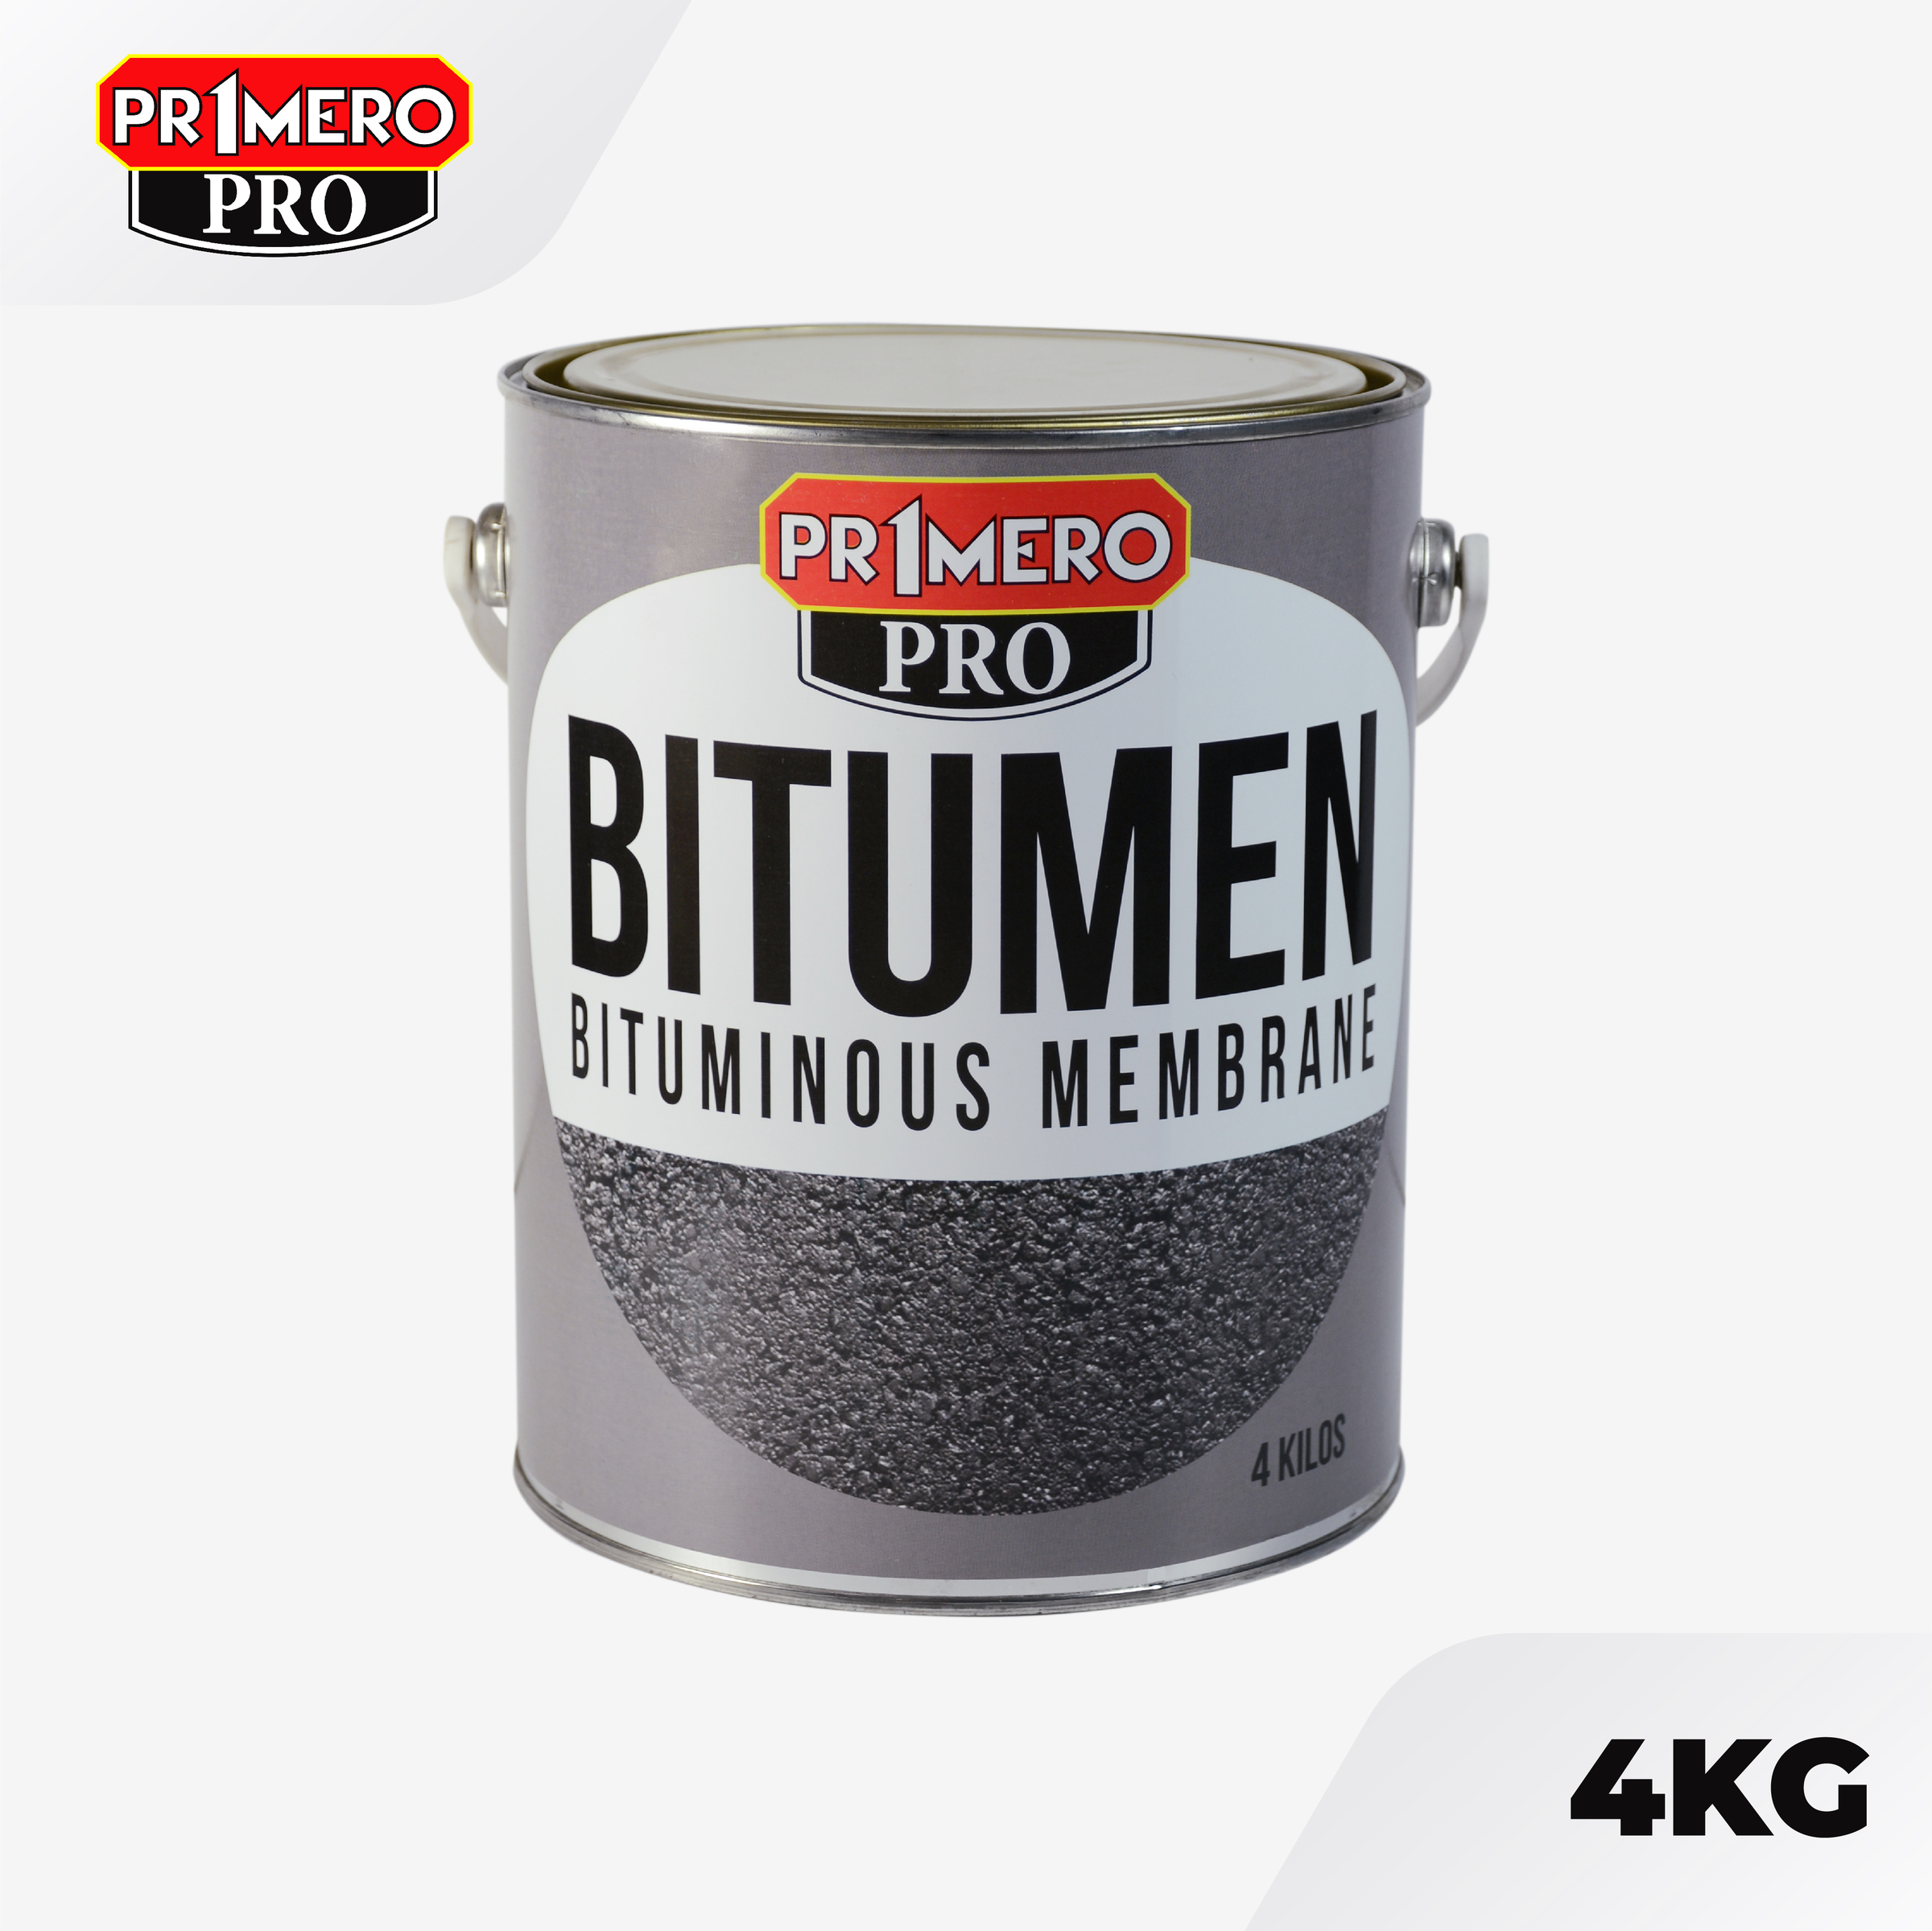 Primero Pro Bitumen Membrane - 4kgs